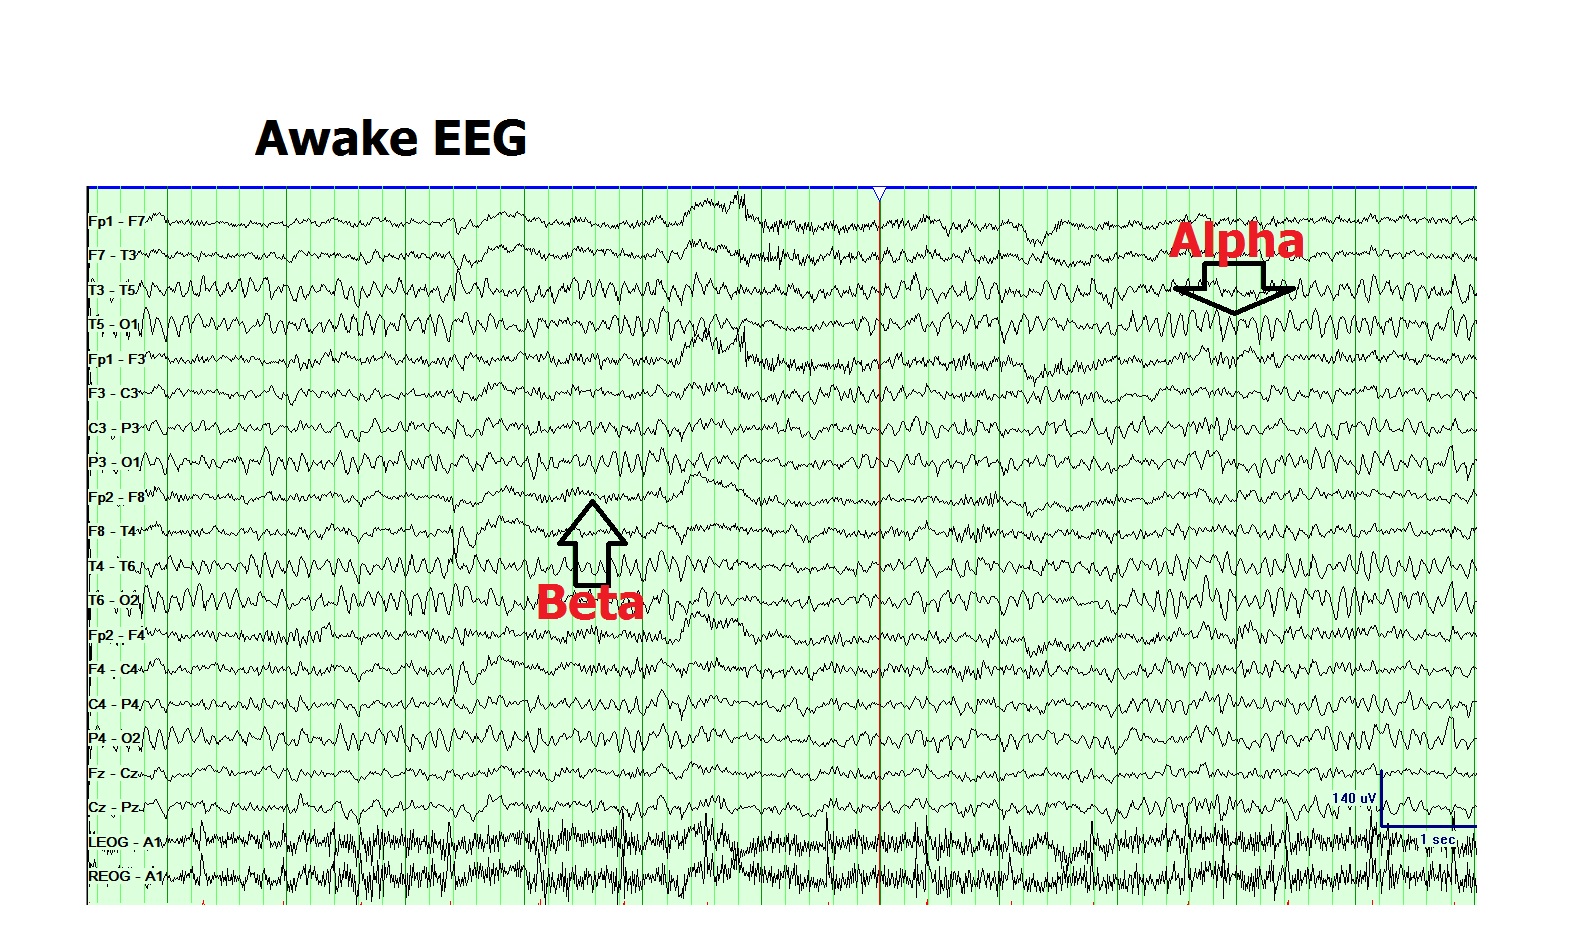 Normal Awake EEG